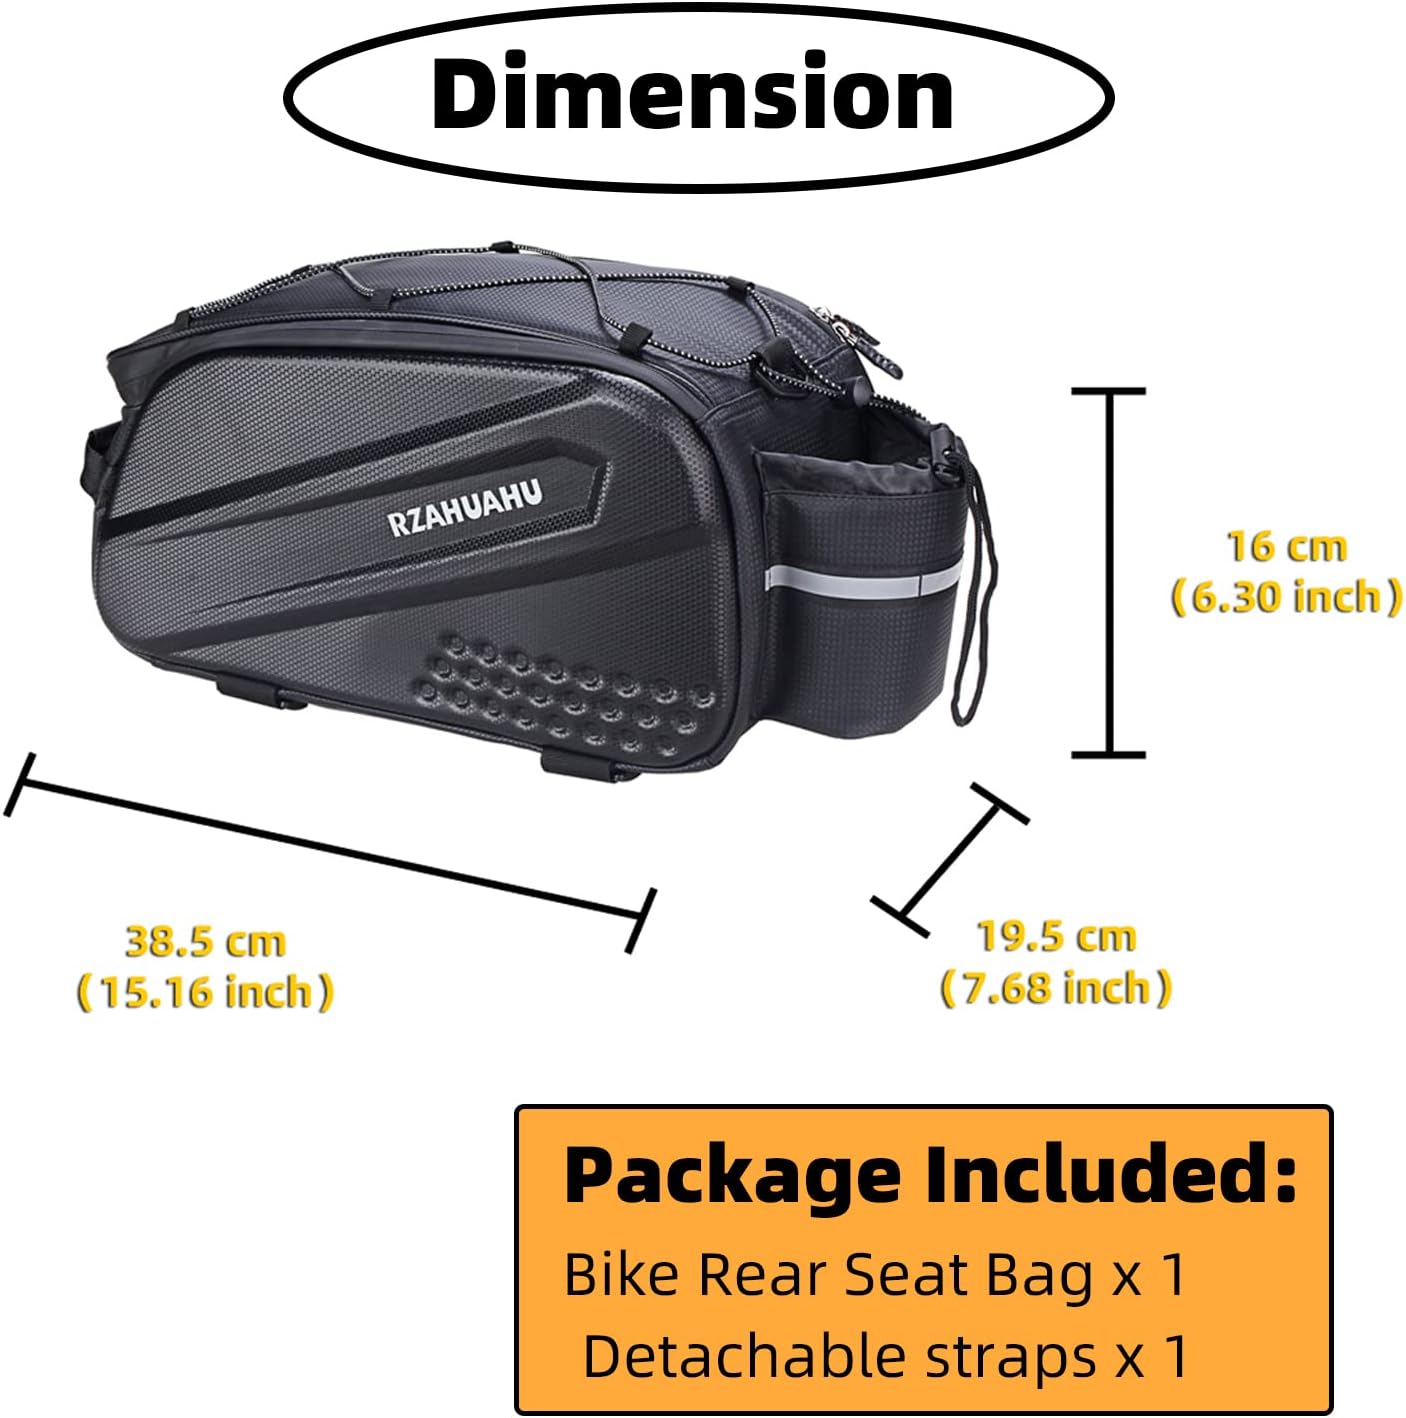 27*9.5*7cm E-bike Controller Bag Case Storage Holder For Electric Bicycle  Bike | eBay